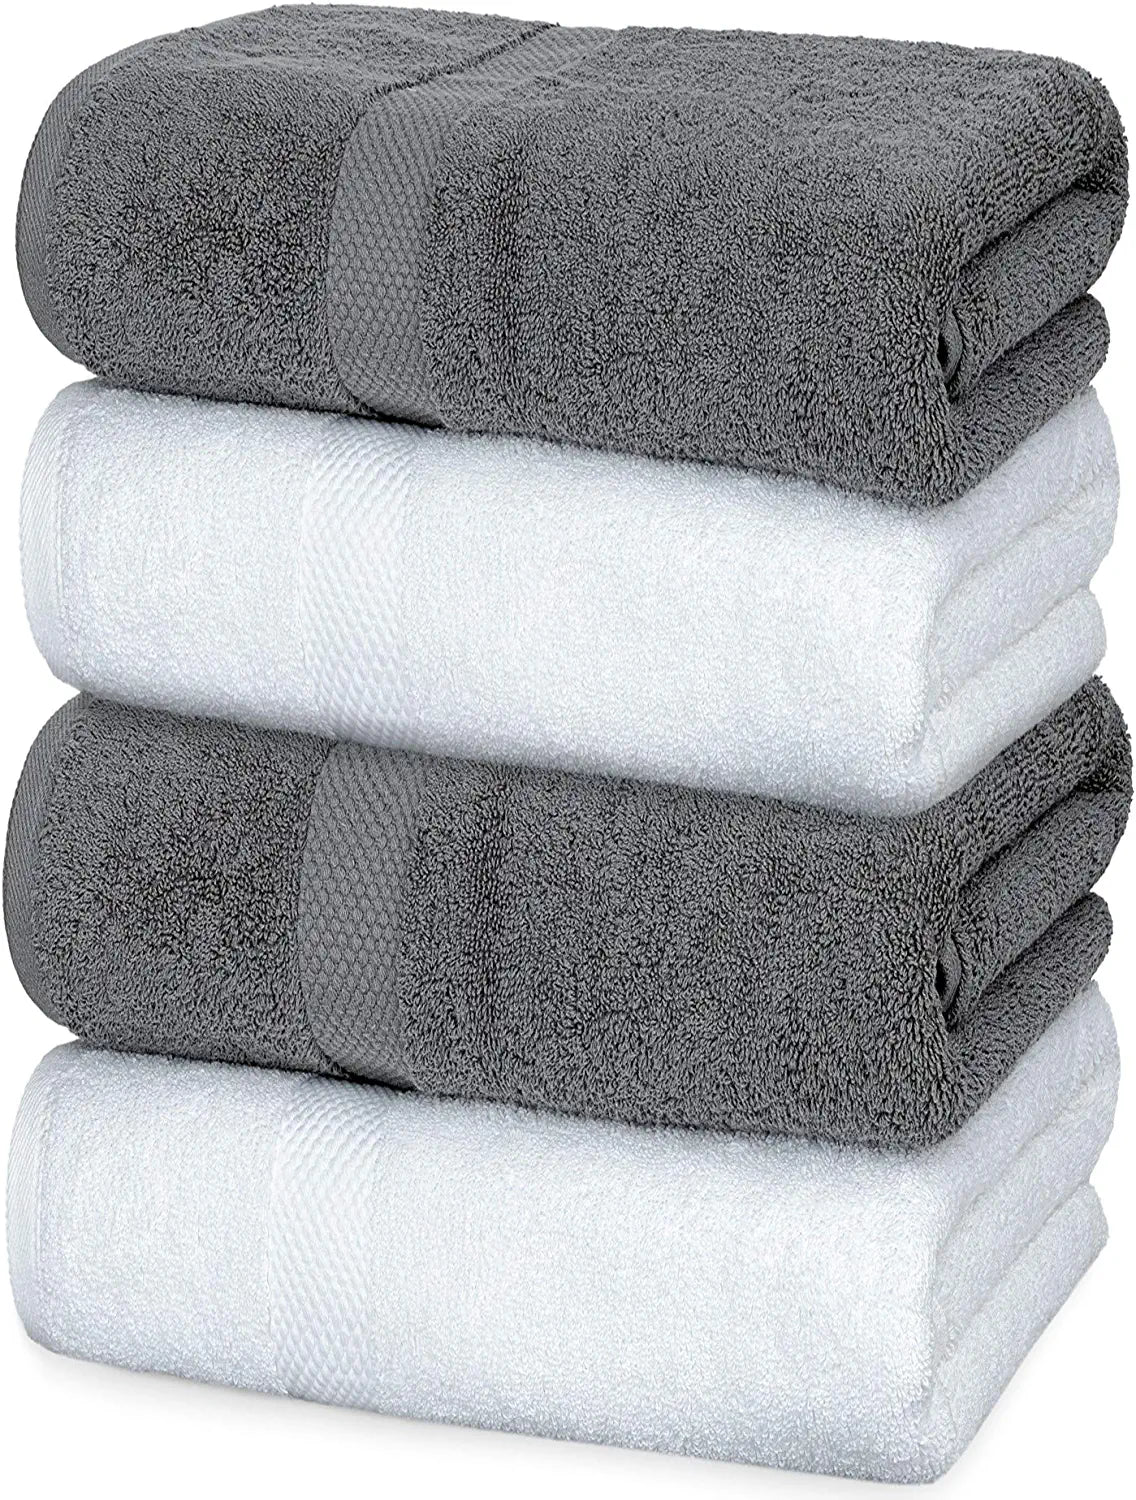 White Classic Luxury 100% Cotton Bath Towels Set of 4 - 27x54 White